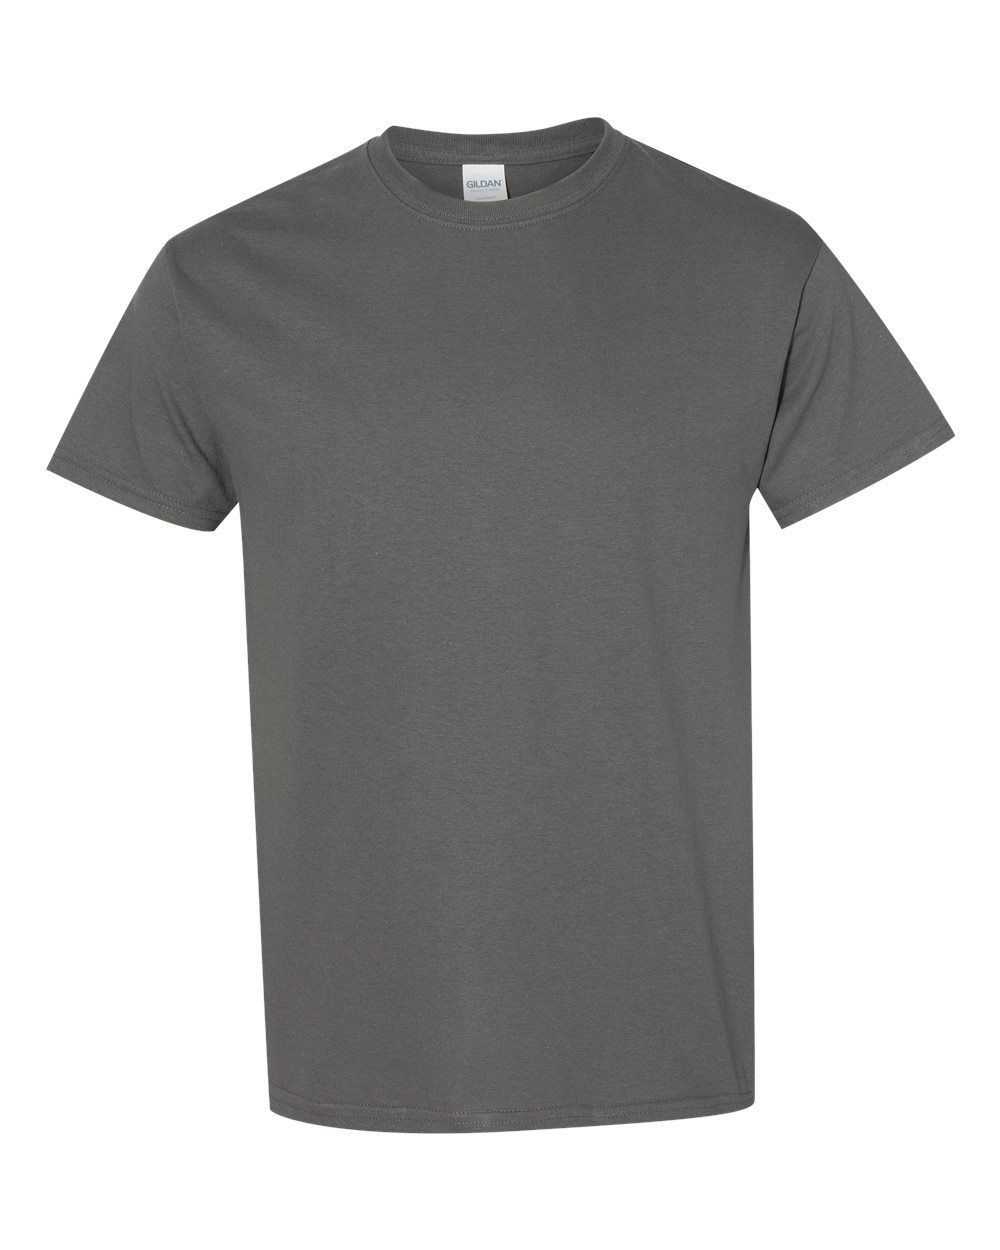 IWPF - Men's T-Shirt Short Sleeve - Tough Guys Wear Pink Cancer - image 2 of 3